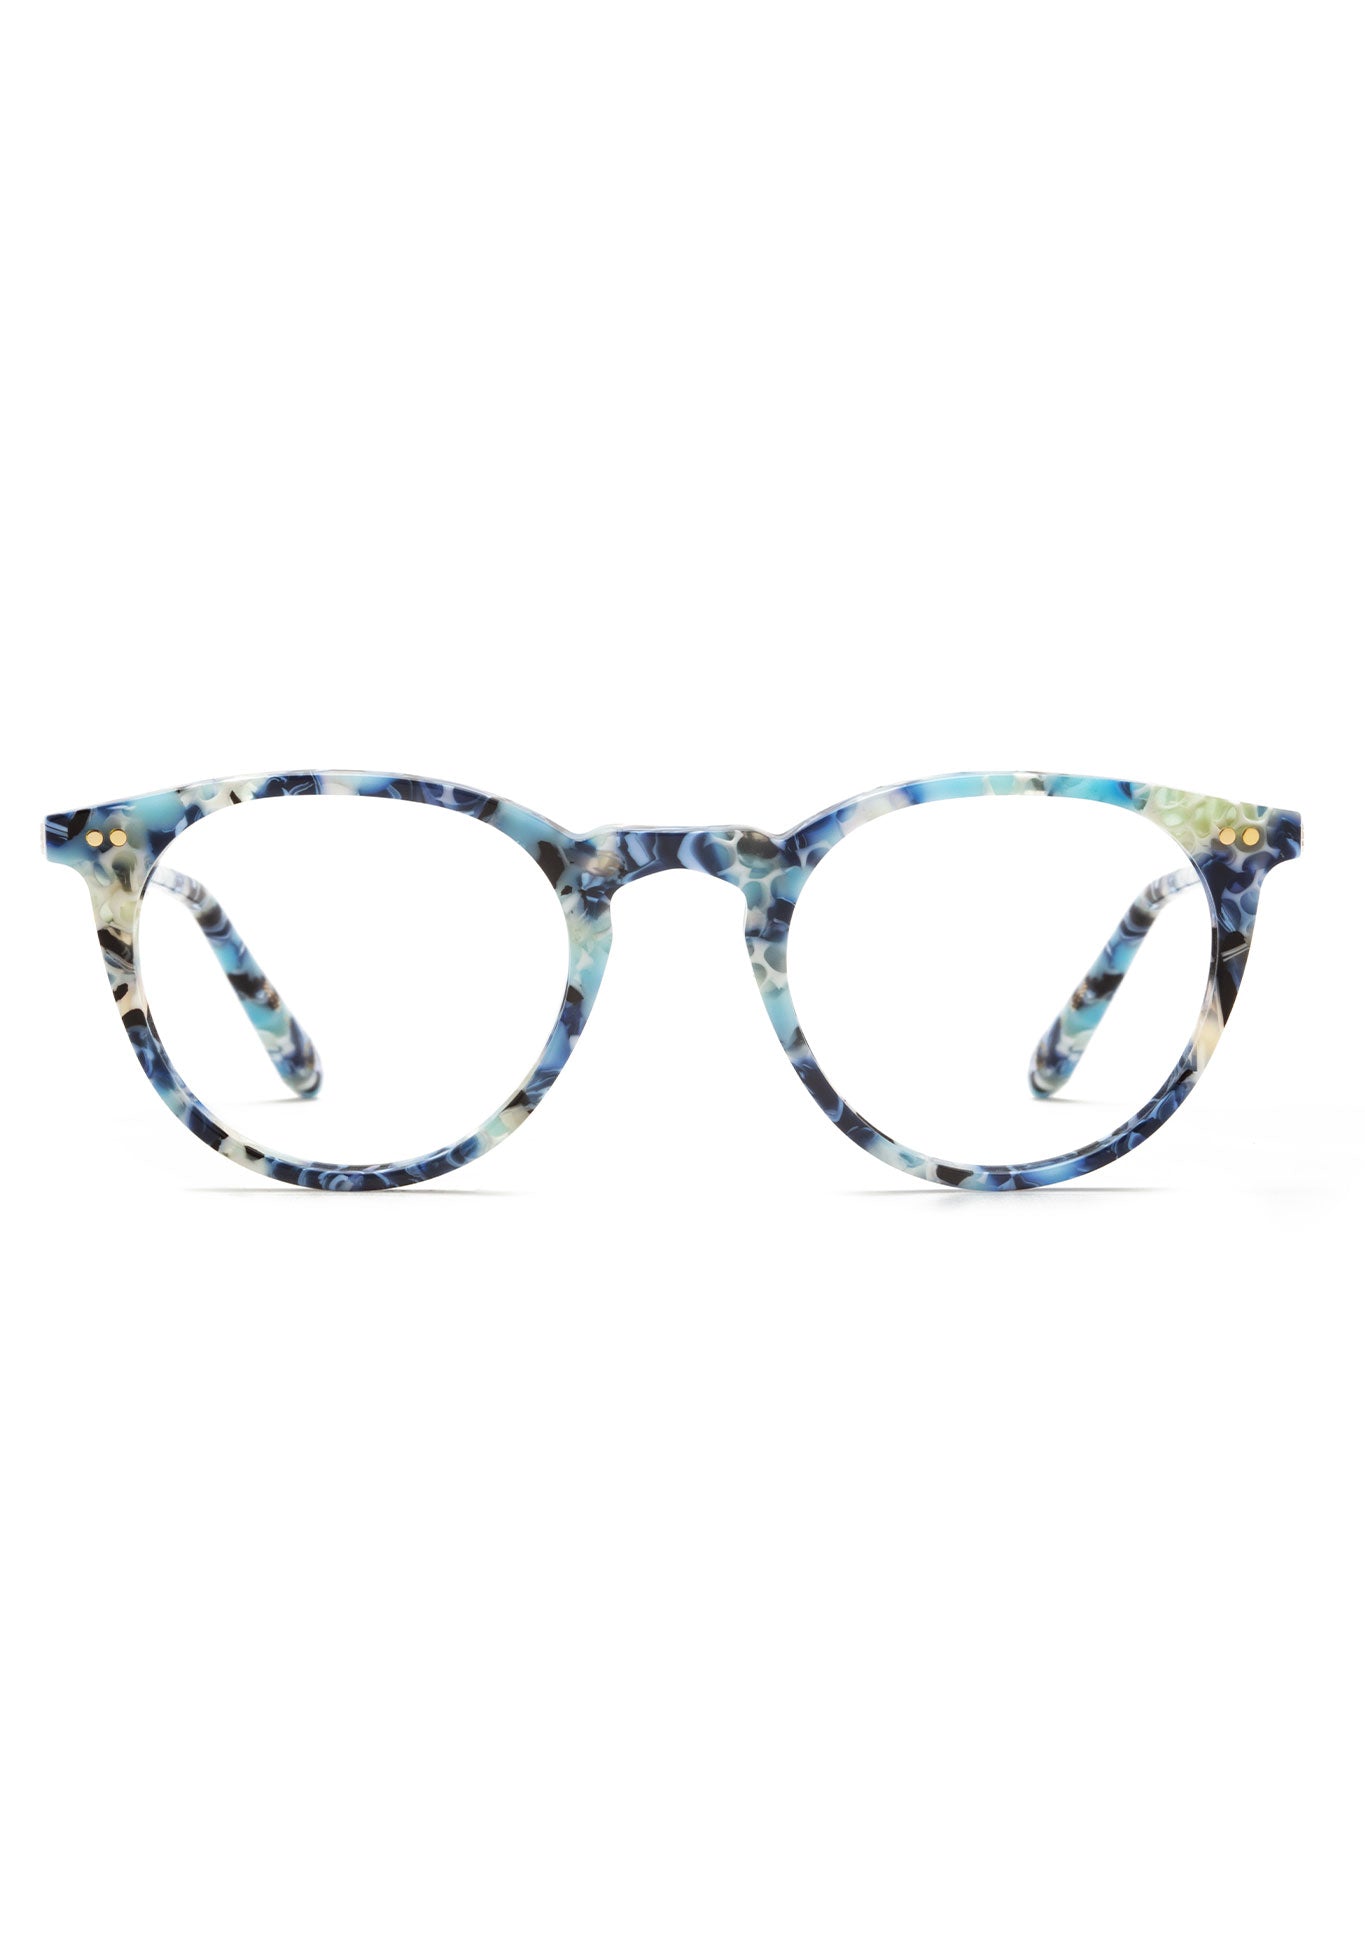 KREWE - Designer Round Eyeglasses - LISBON | Azul Handcrafted, luxury blue patterned acetate eyeglasses. Similar to Oliver Peoples eyeglasses, moscot eyeglasses, warby parker eyeglasses